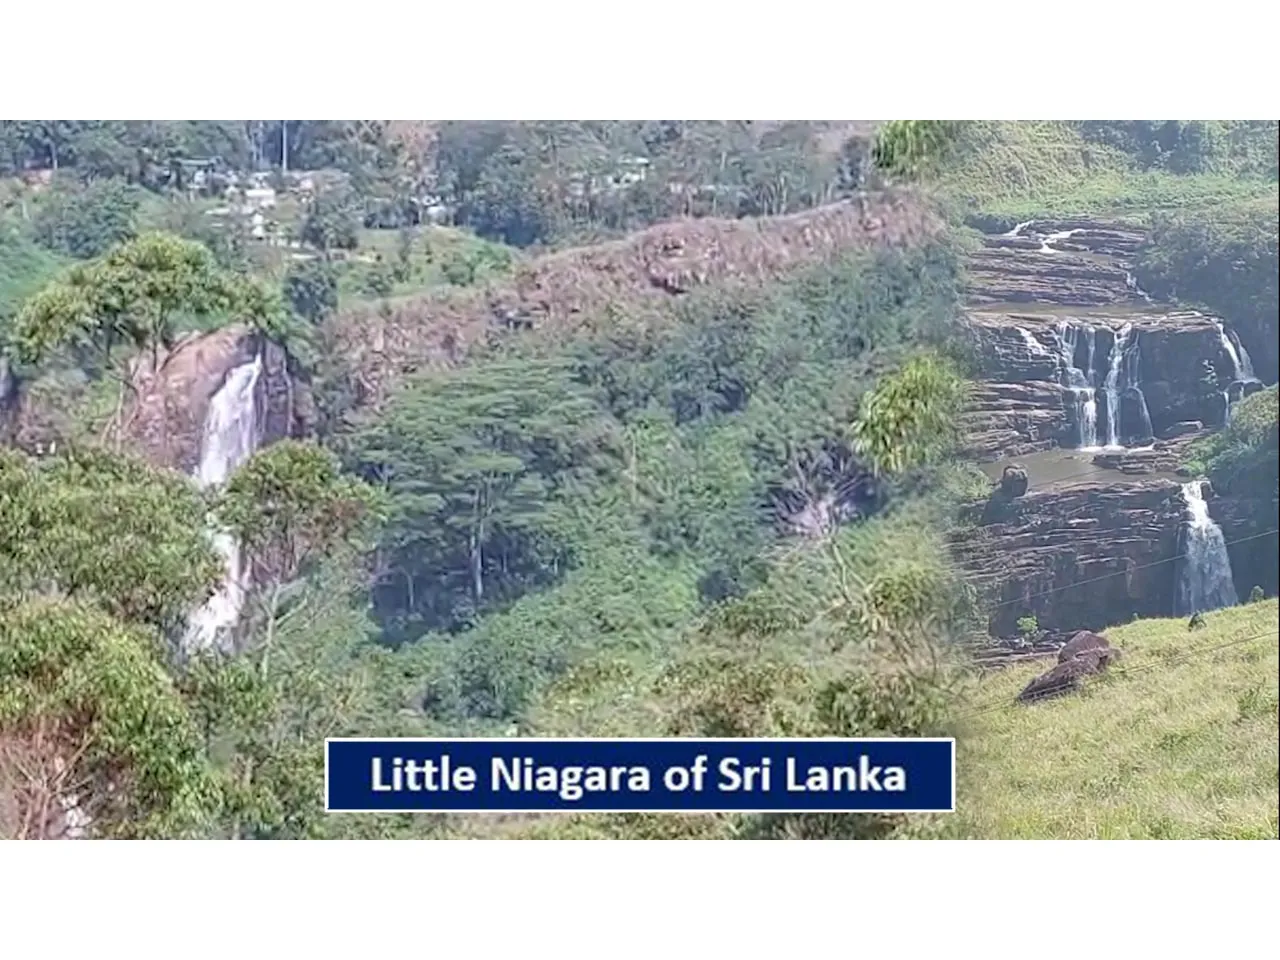 Little Niagara of Sri Lanka